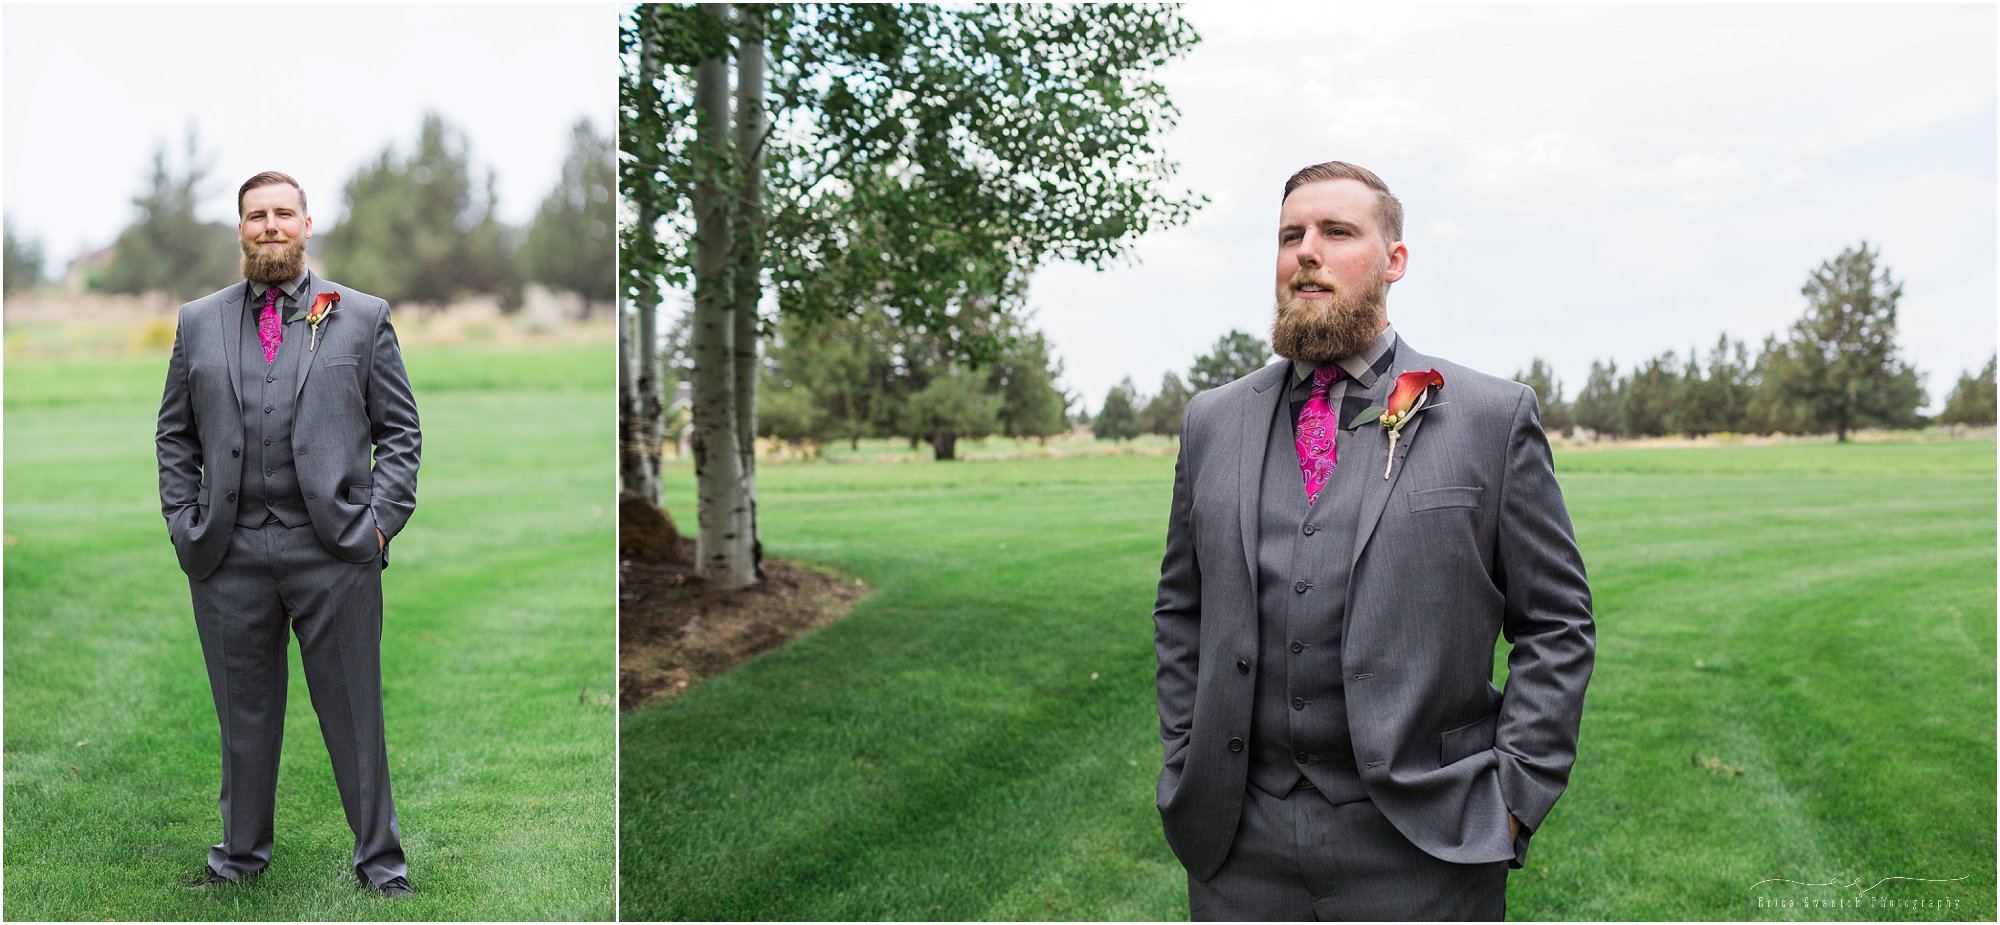 Formal groom portraits for this Bend, Oregon groom. | Erica Swantek Photography